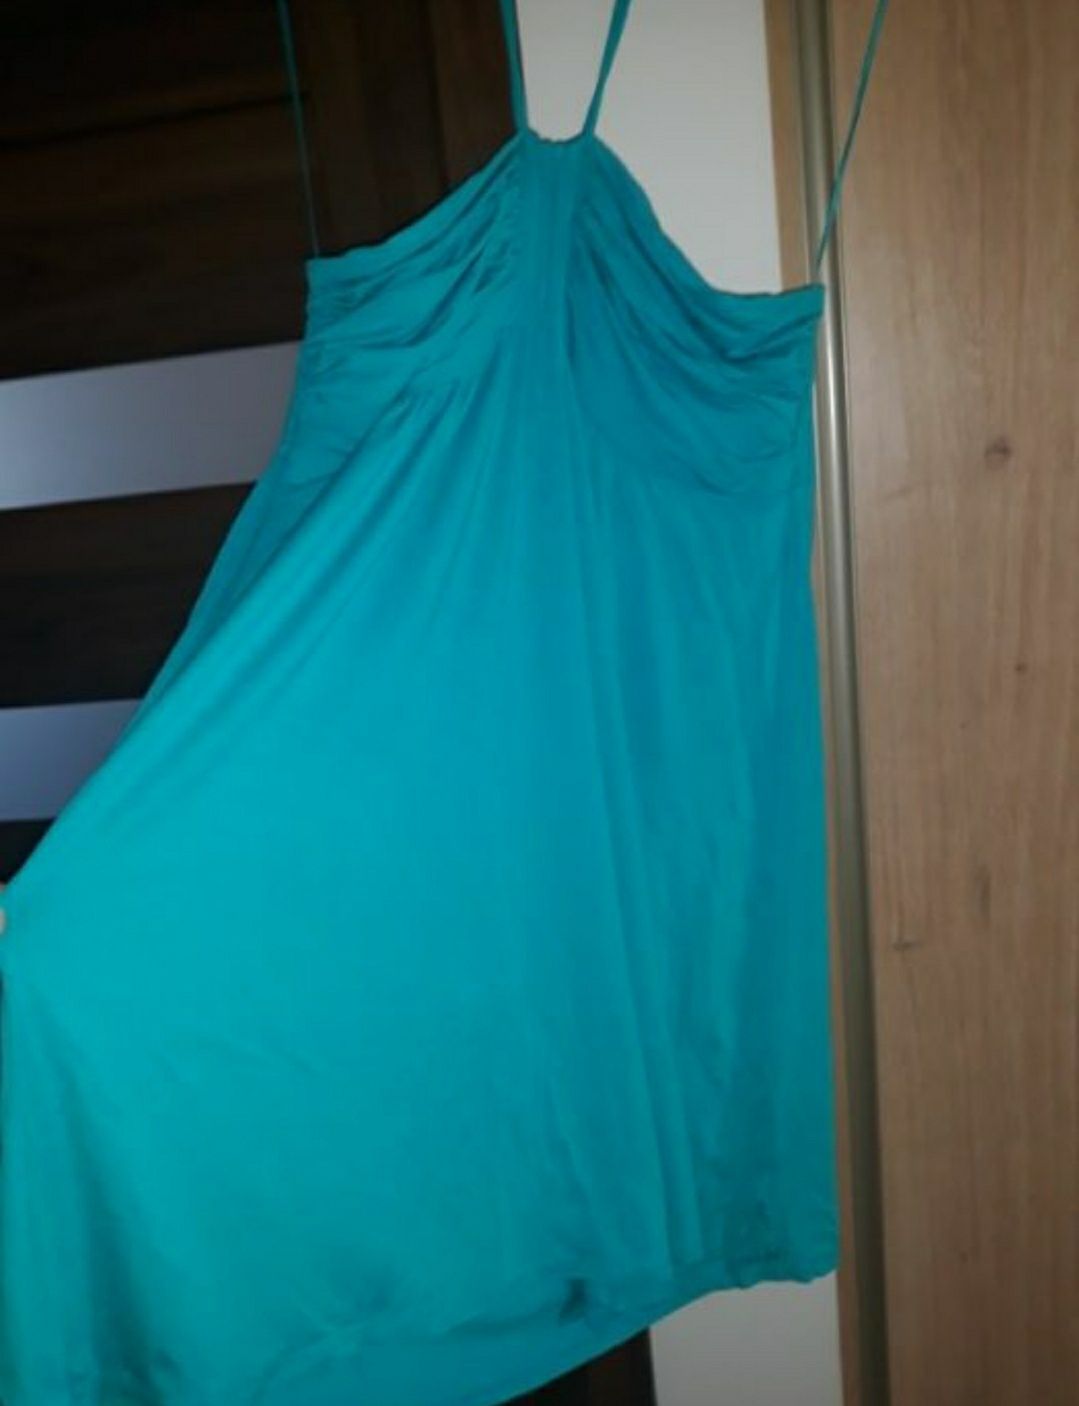 Morska, niebieska sukienka XL-XXL